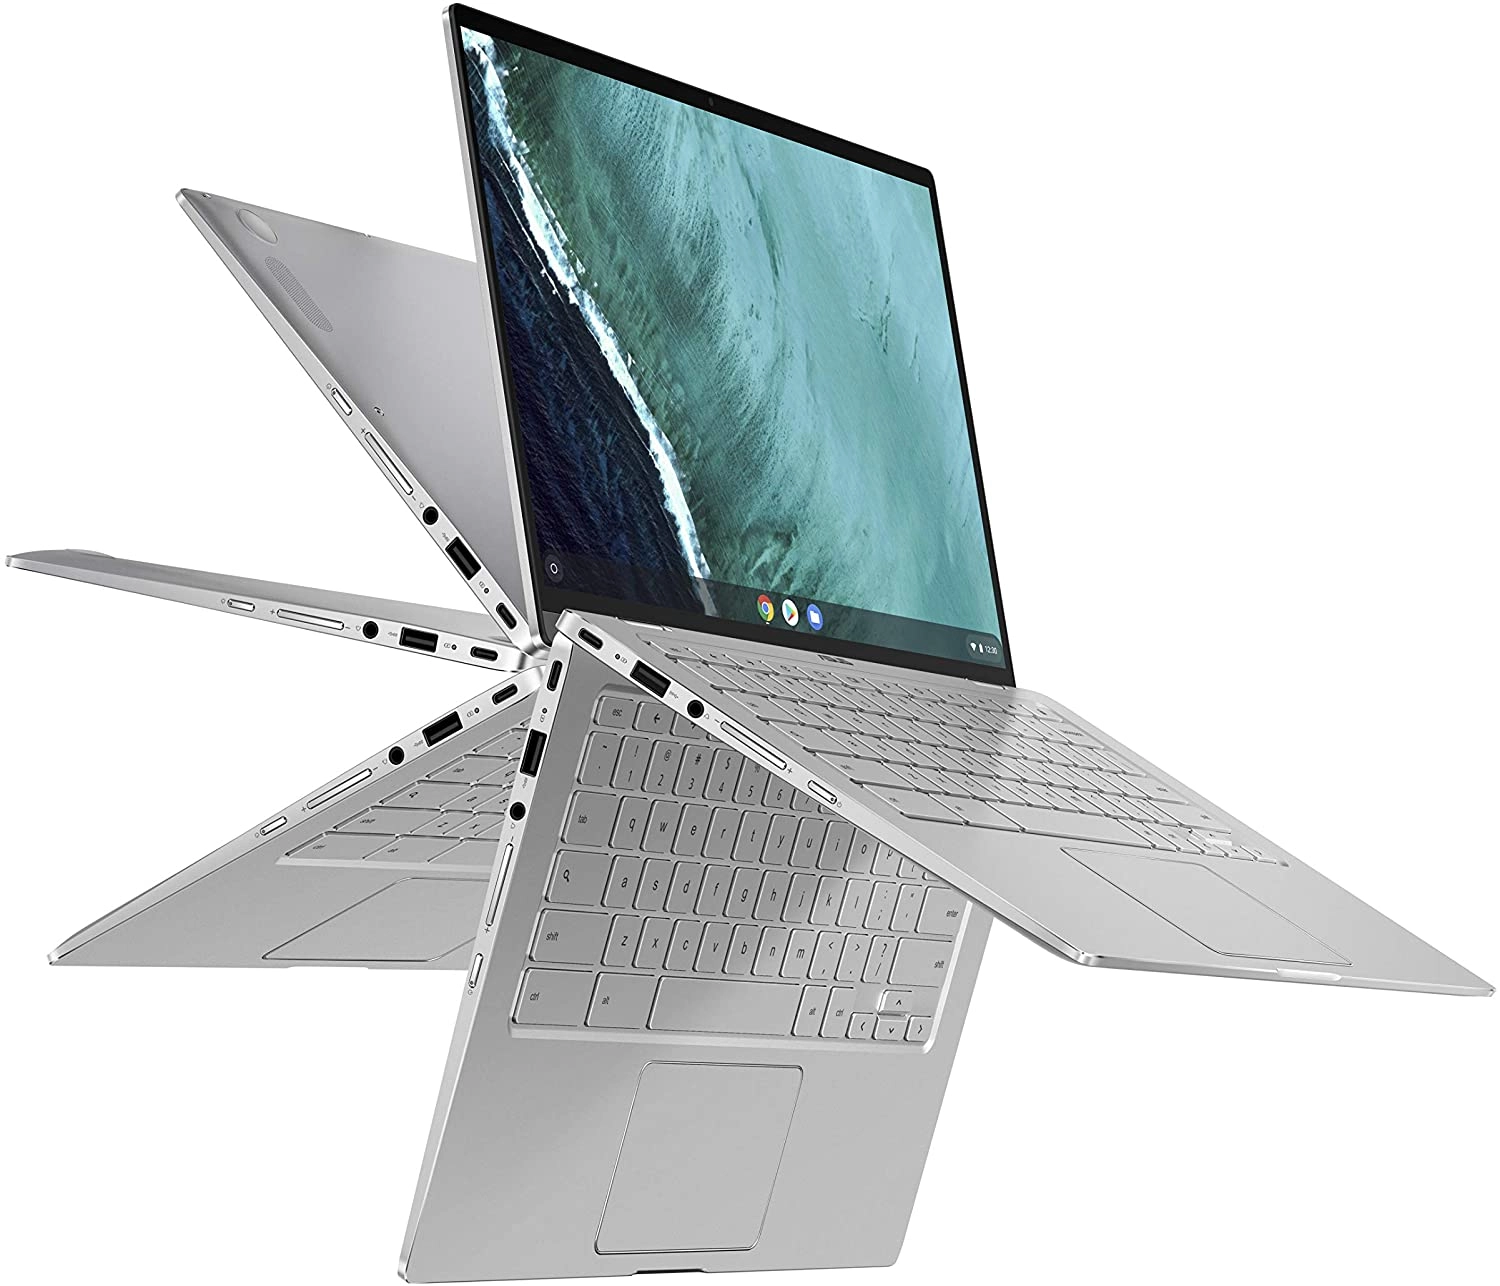 Asus Chromebook C434 laptop image